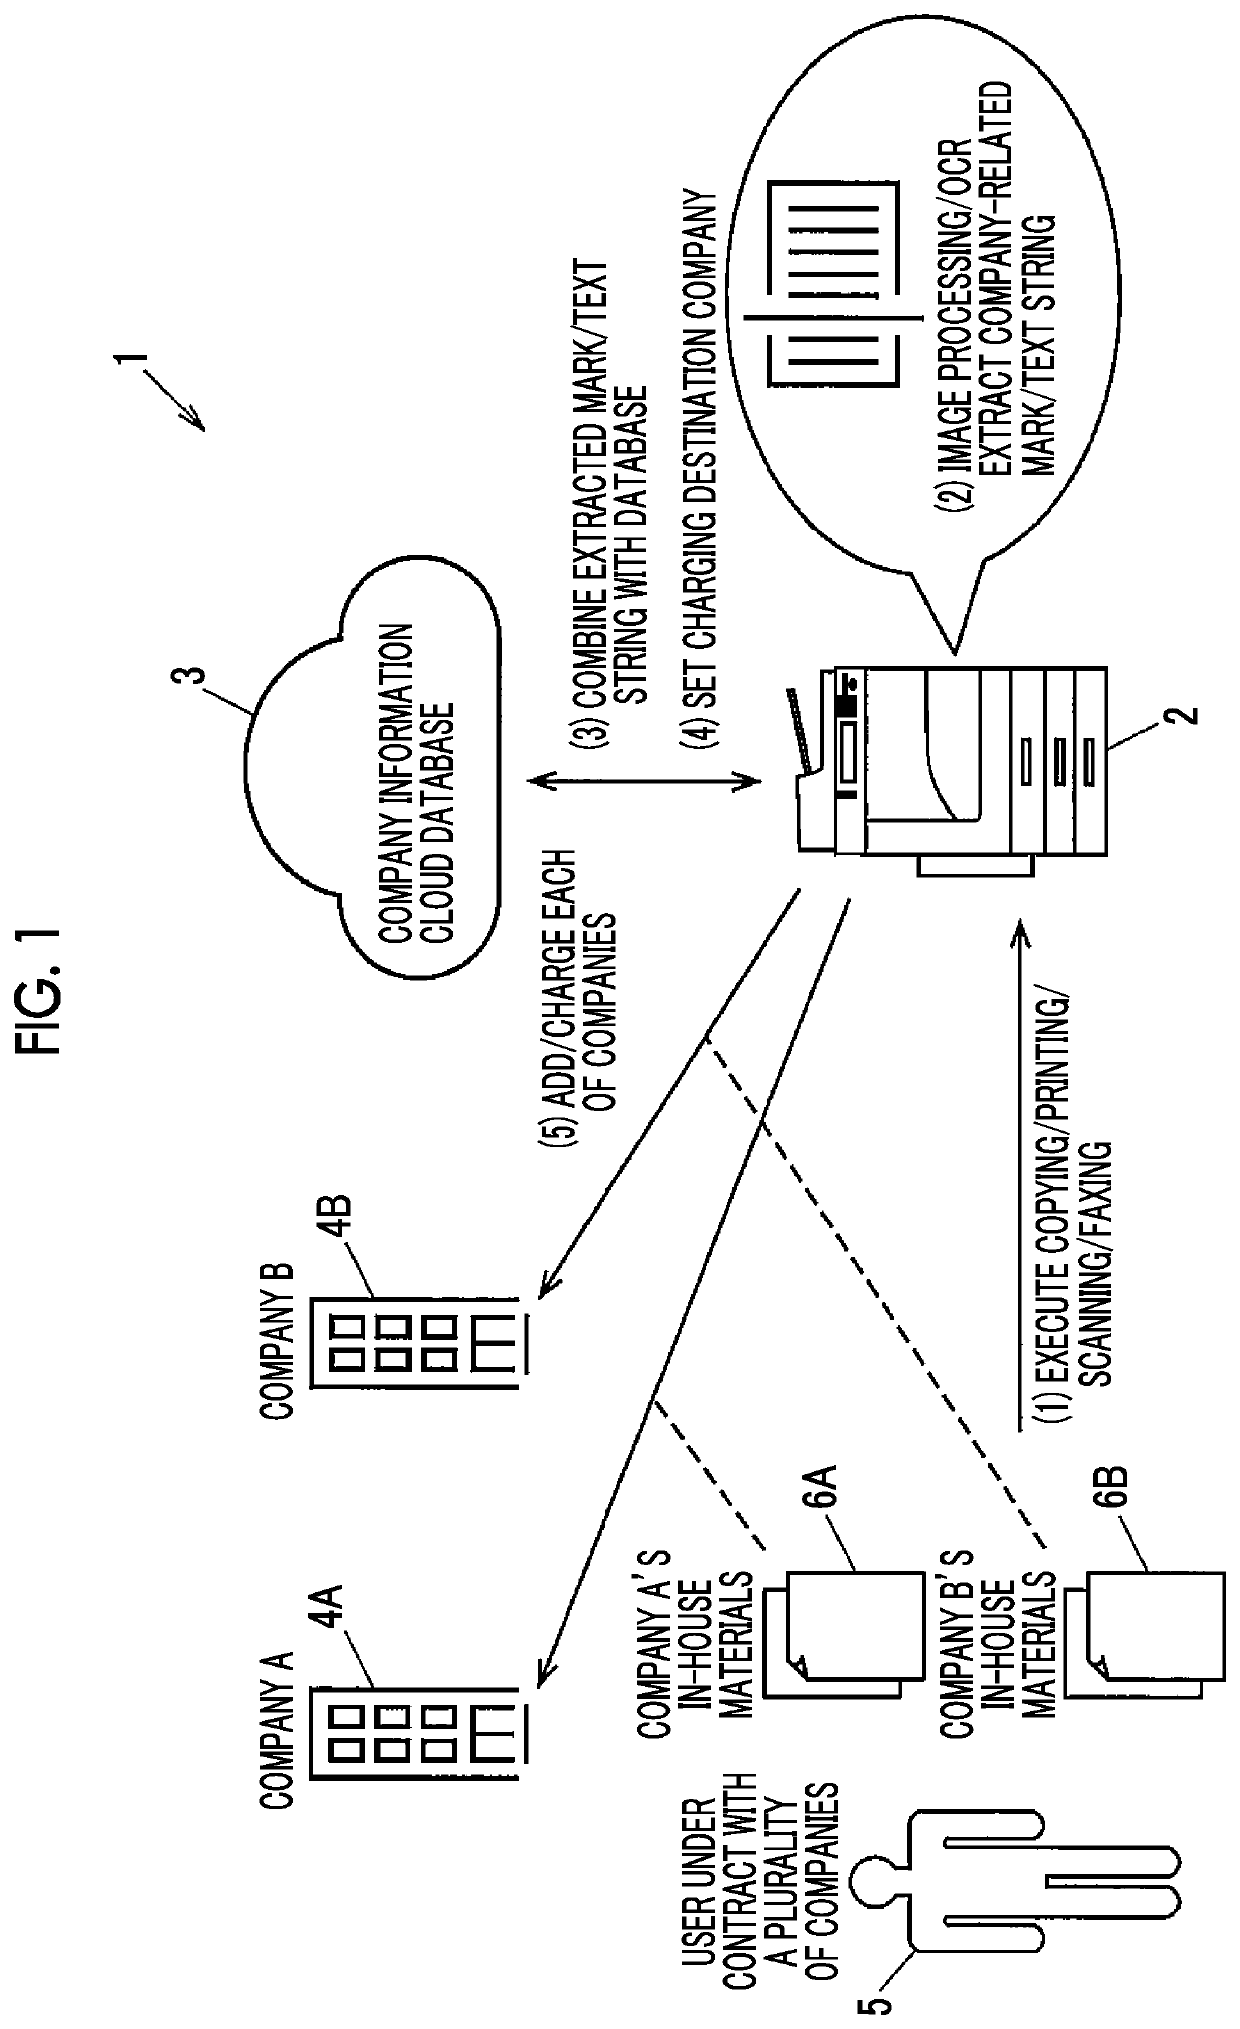 Image processing apparatus and non-transitory computer readable medium storing program